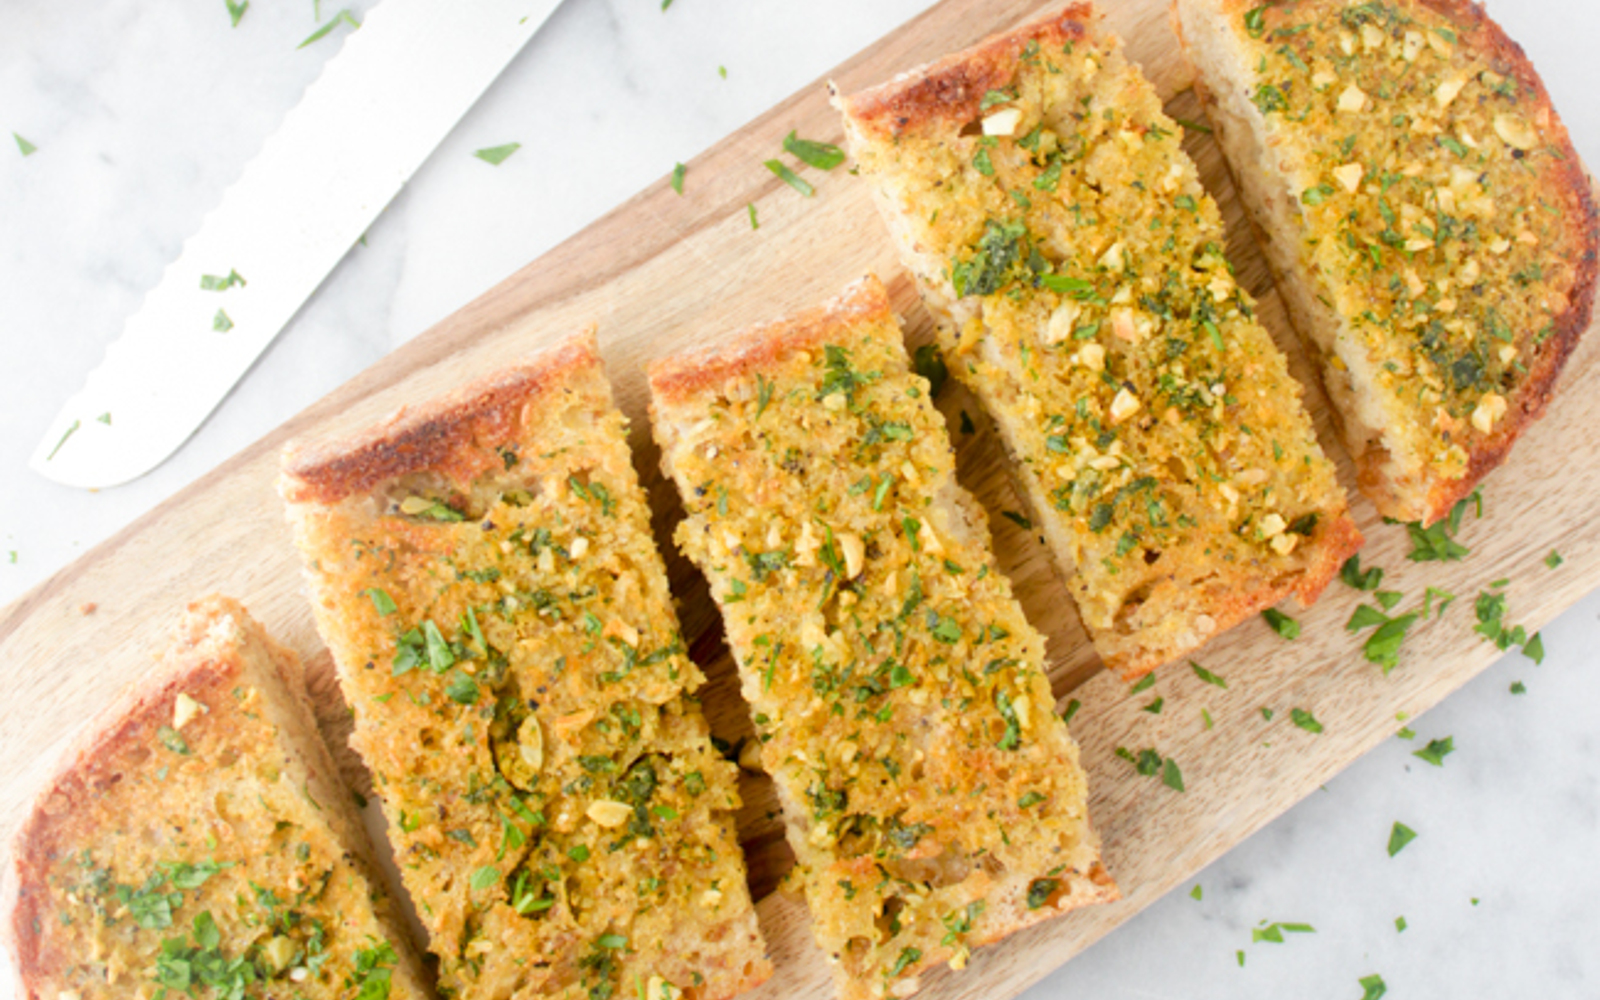 Cheesy Garlic Bread with nutritional yeast